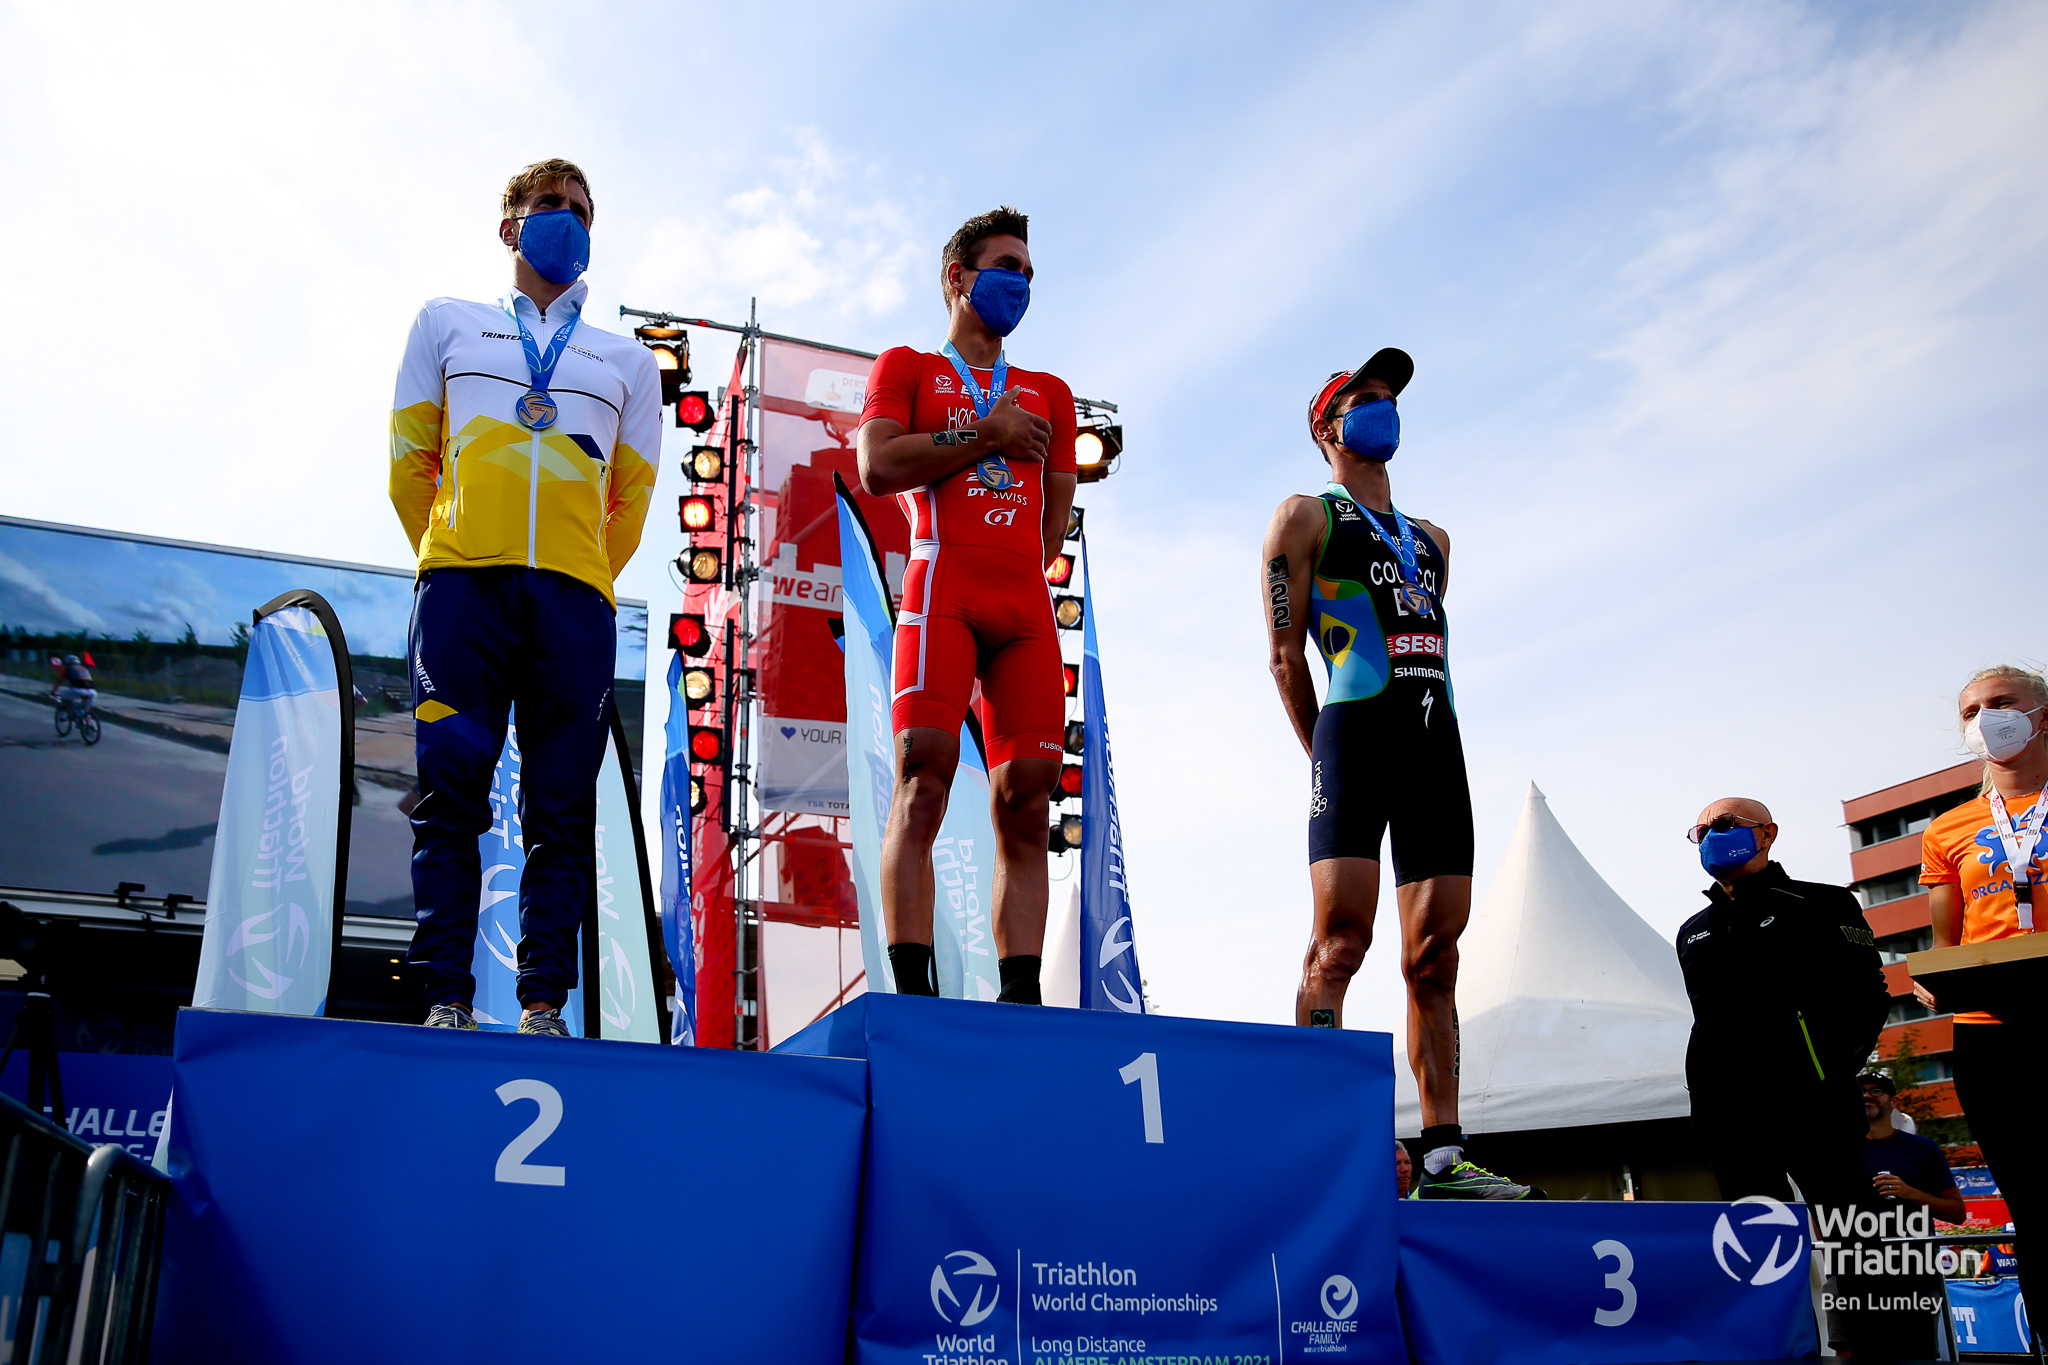 VÍctor Arroyo, Spanish LD triathlon champion, analyzes the new